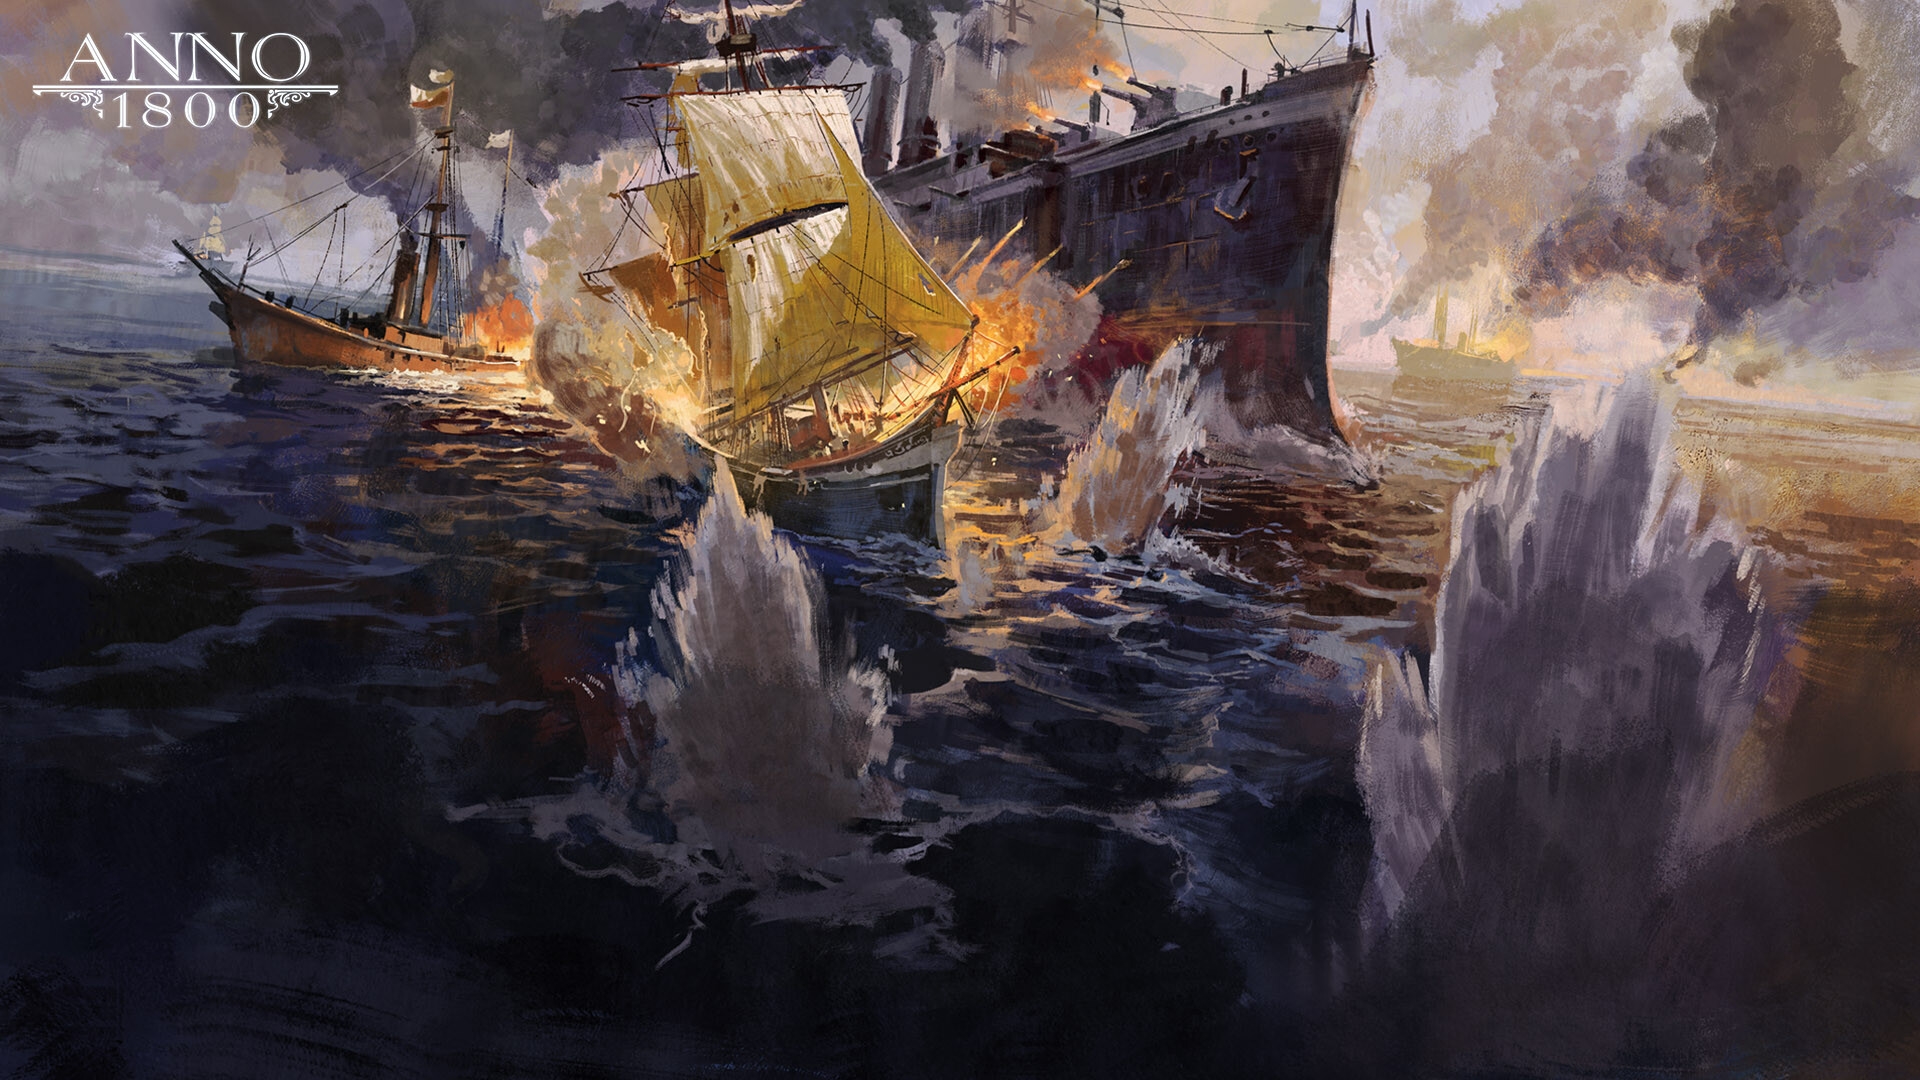 General 1920x1080 Anno 1800 1800s digital art concept art artwork Ubisoft sailing ship Battleships ocean battle explosion